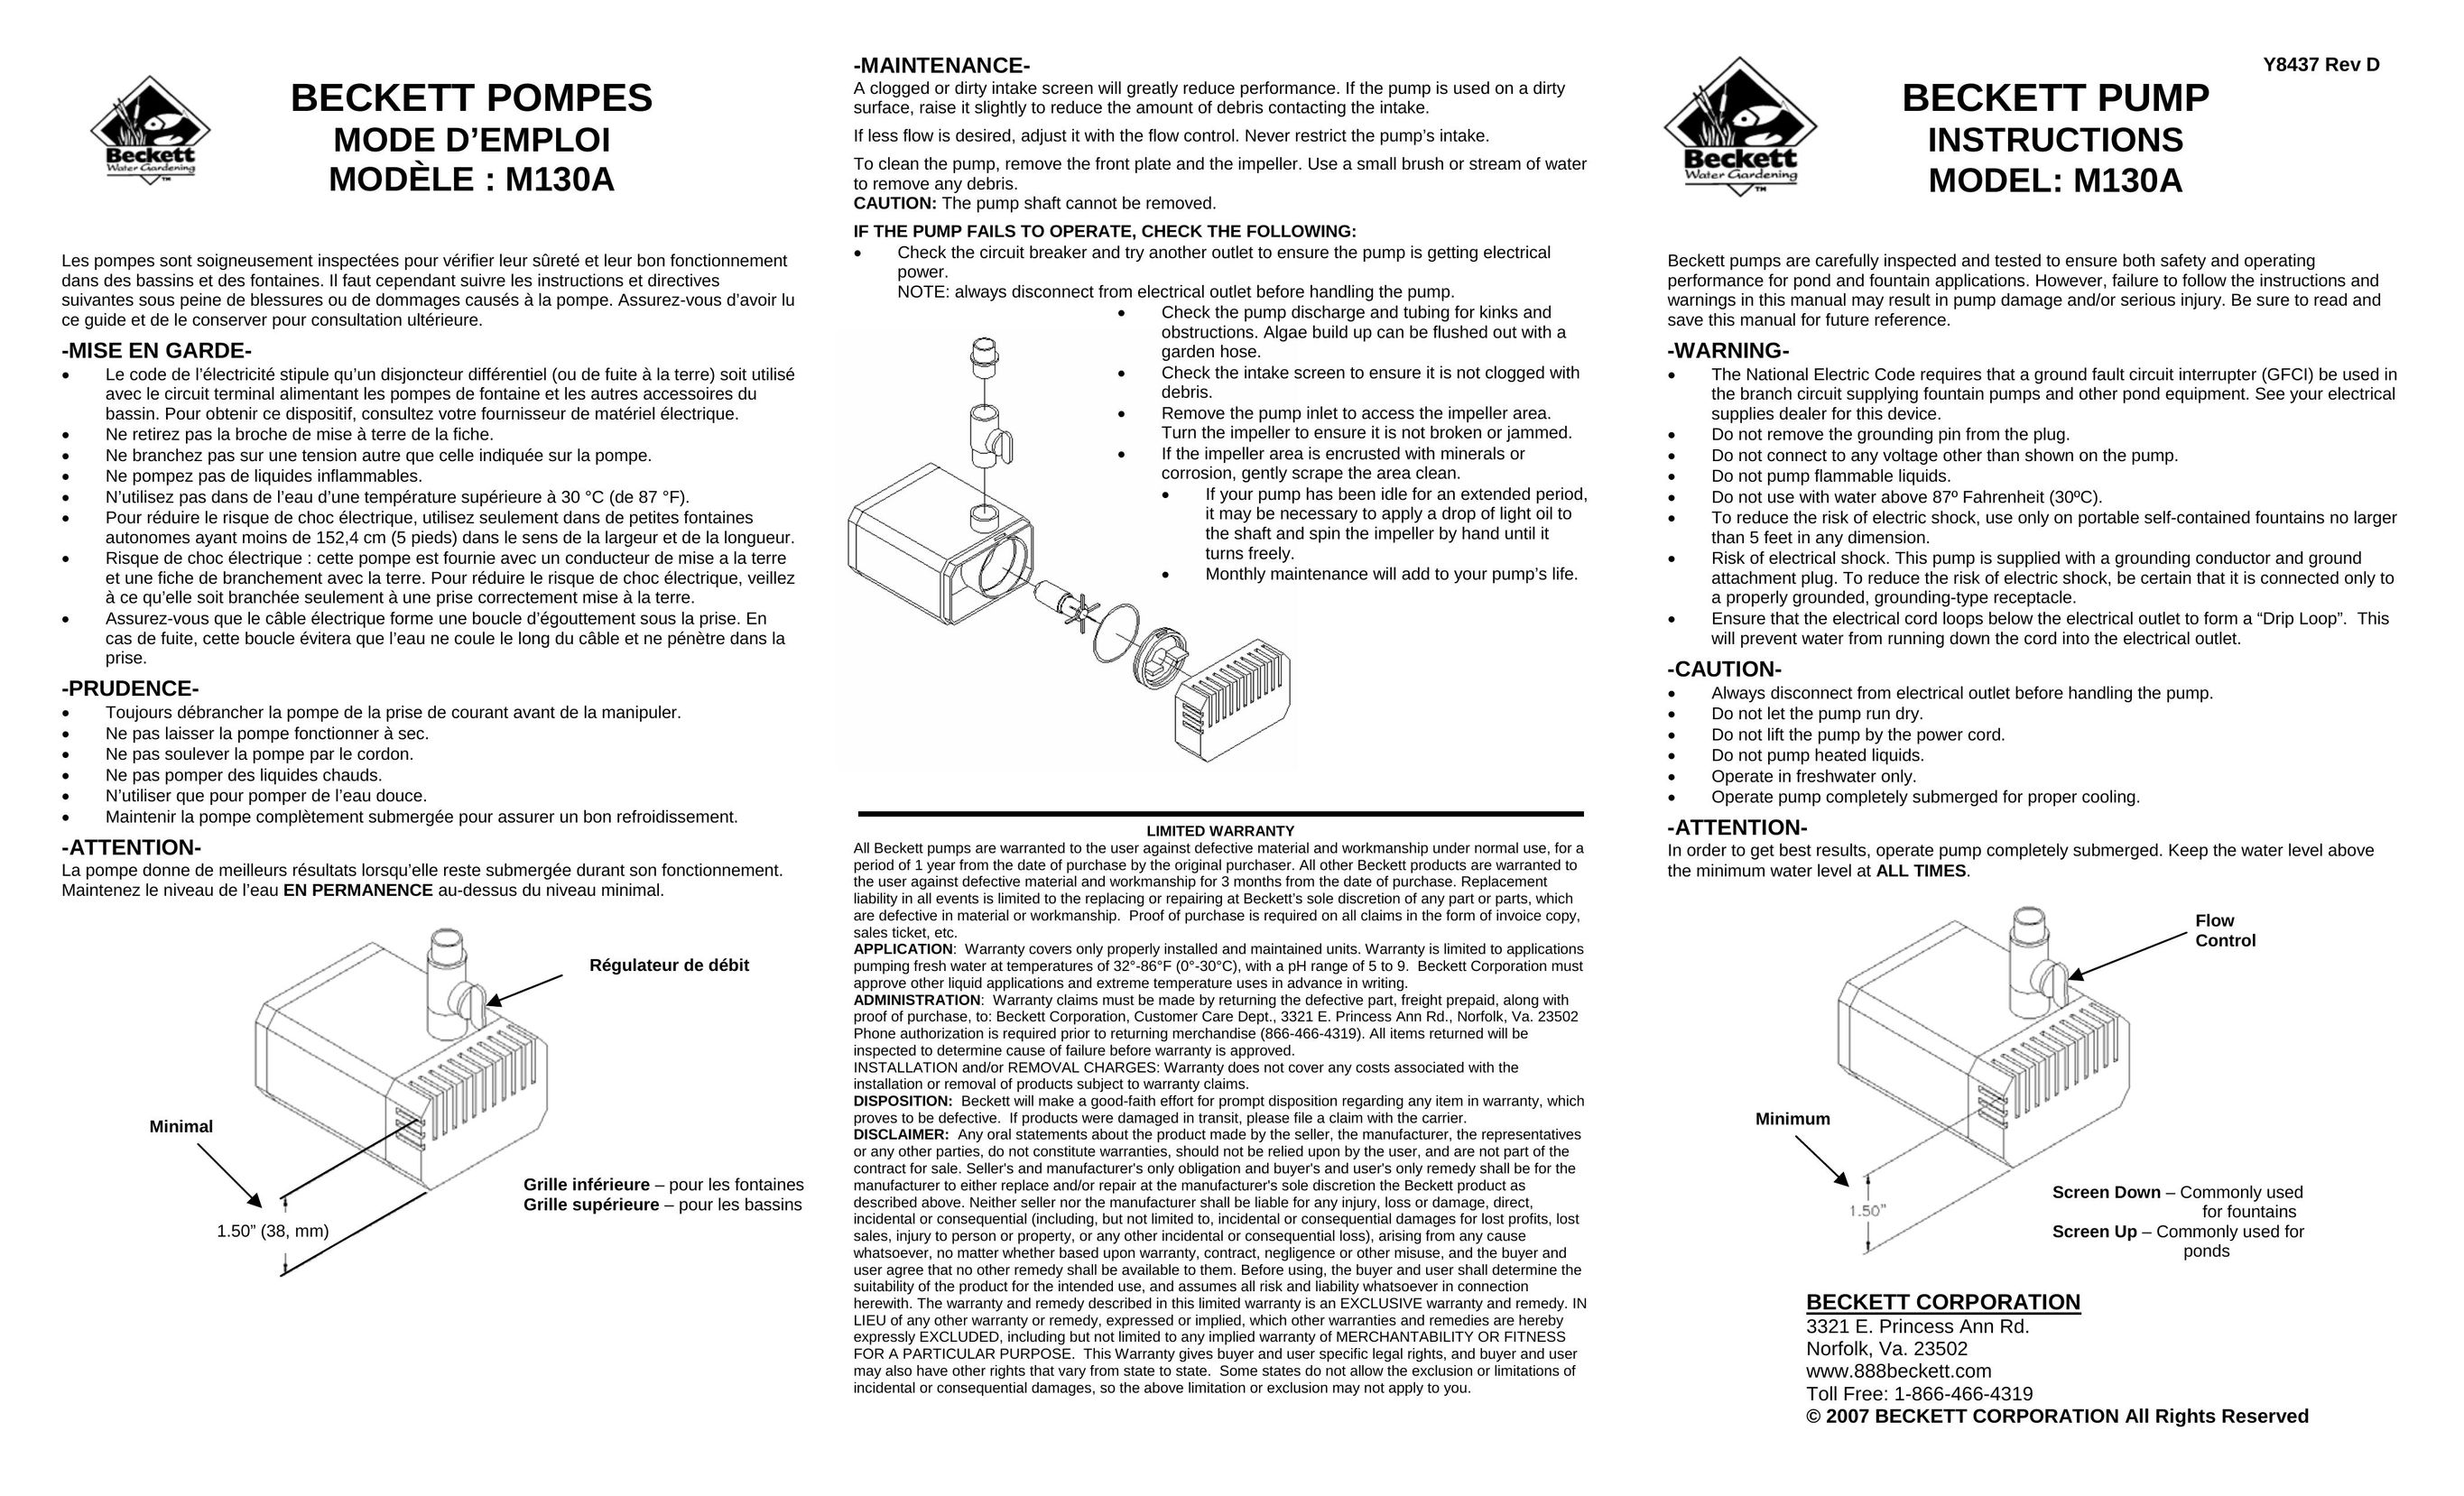 Beckett Water Gardening M130 Plumbing Product User Manual